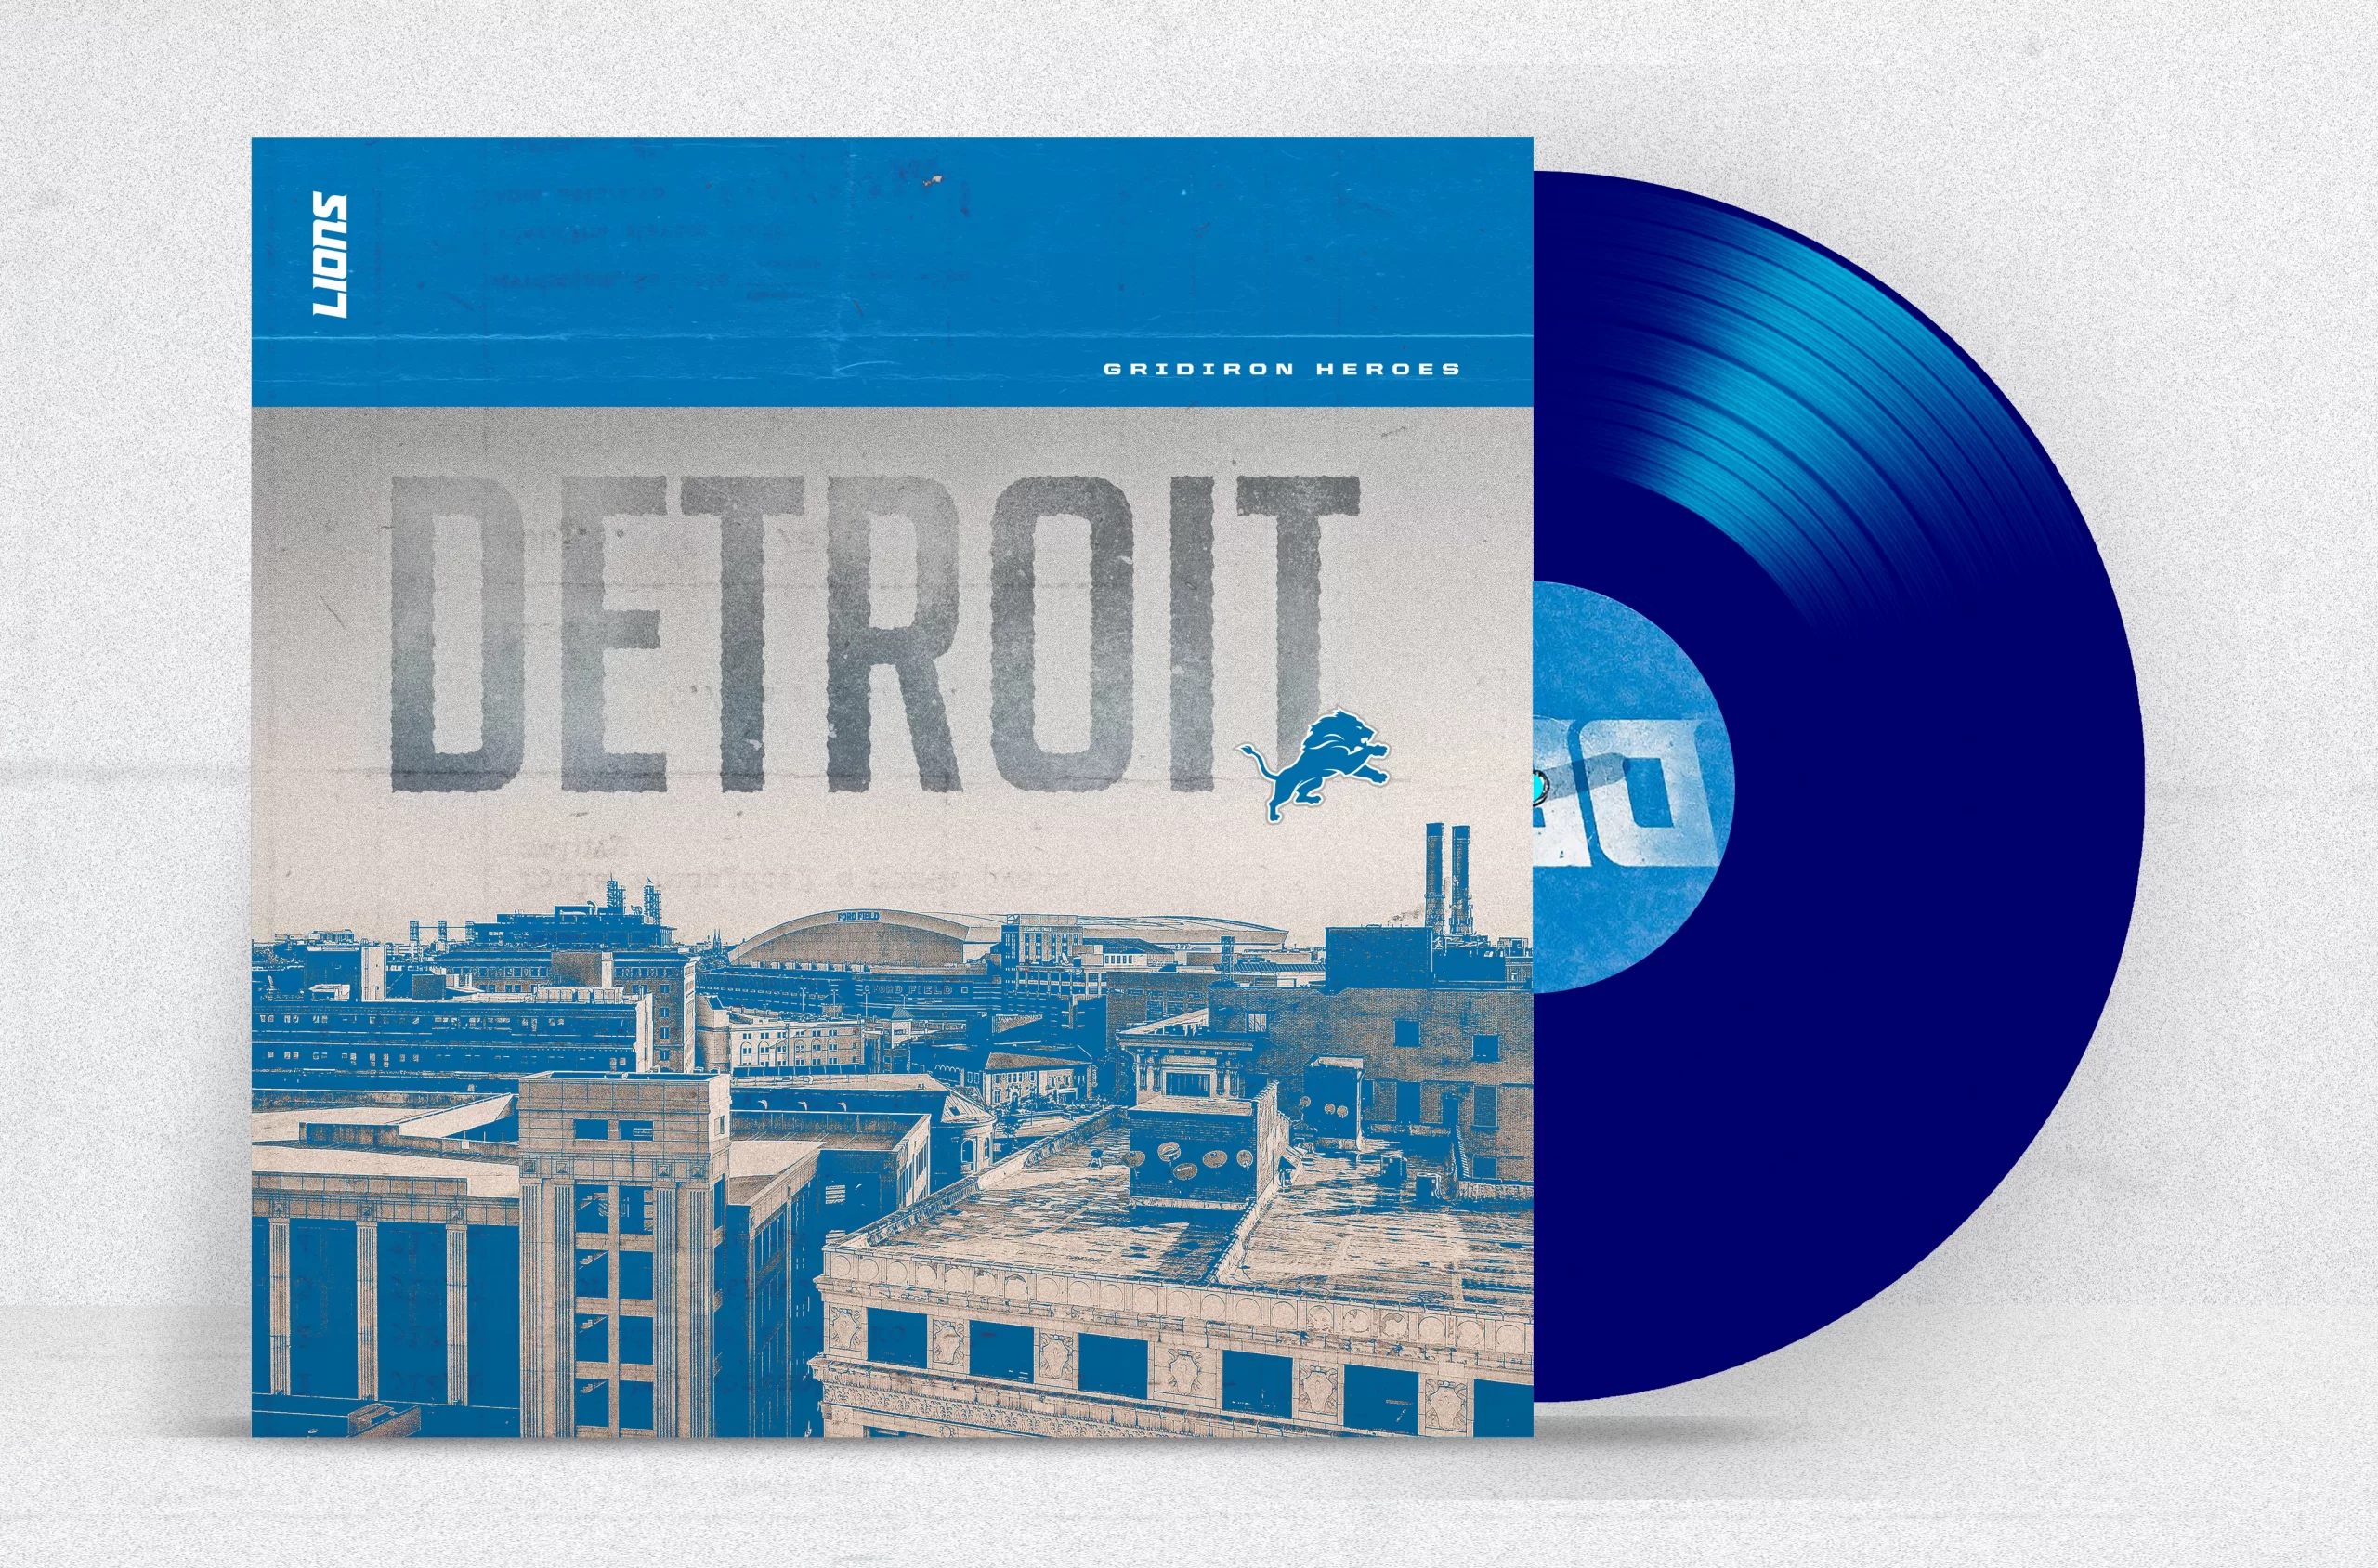 Katie's design for a blue, limited-edition custom Detroit Lions vinyl record.